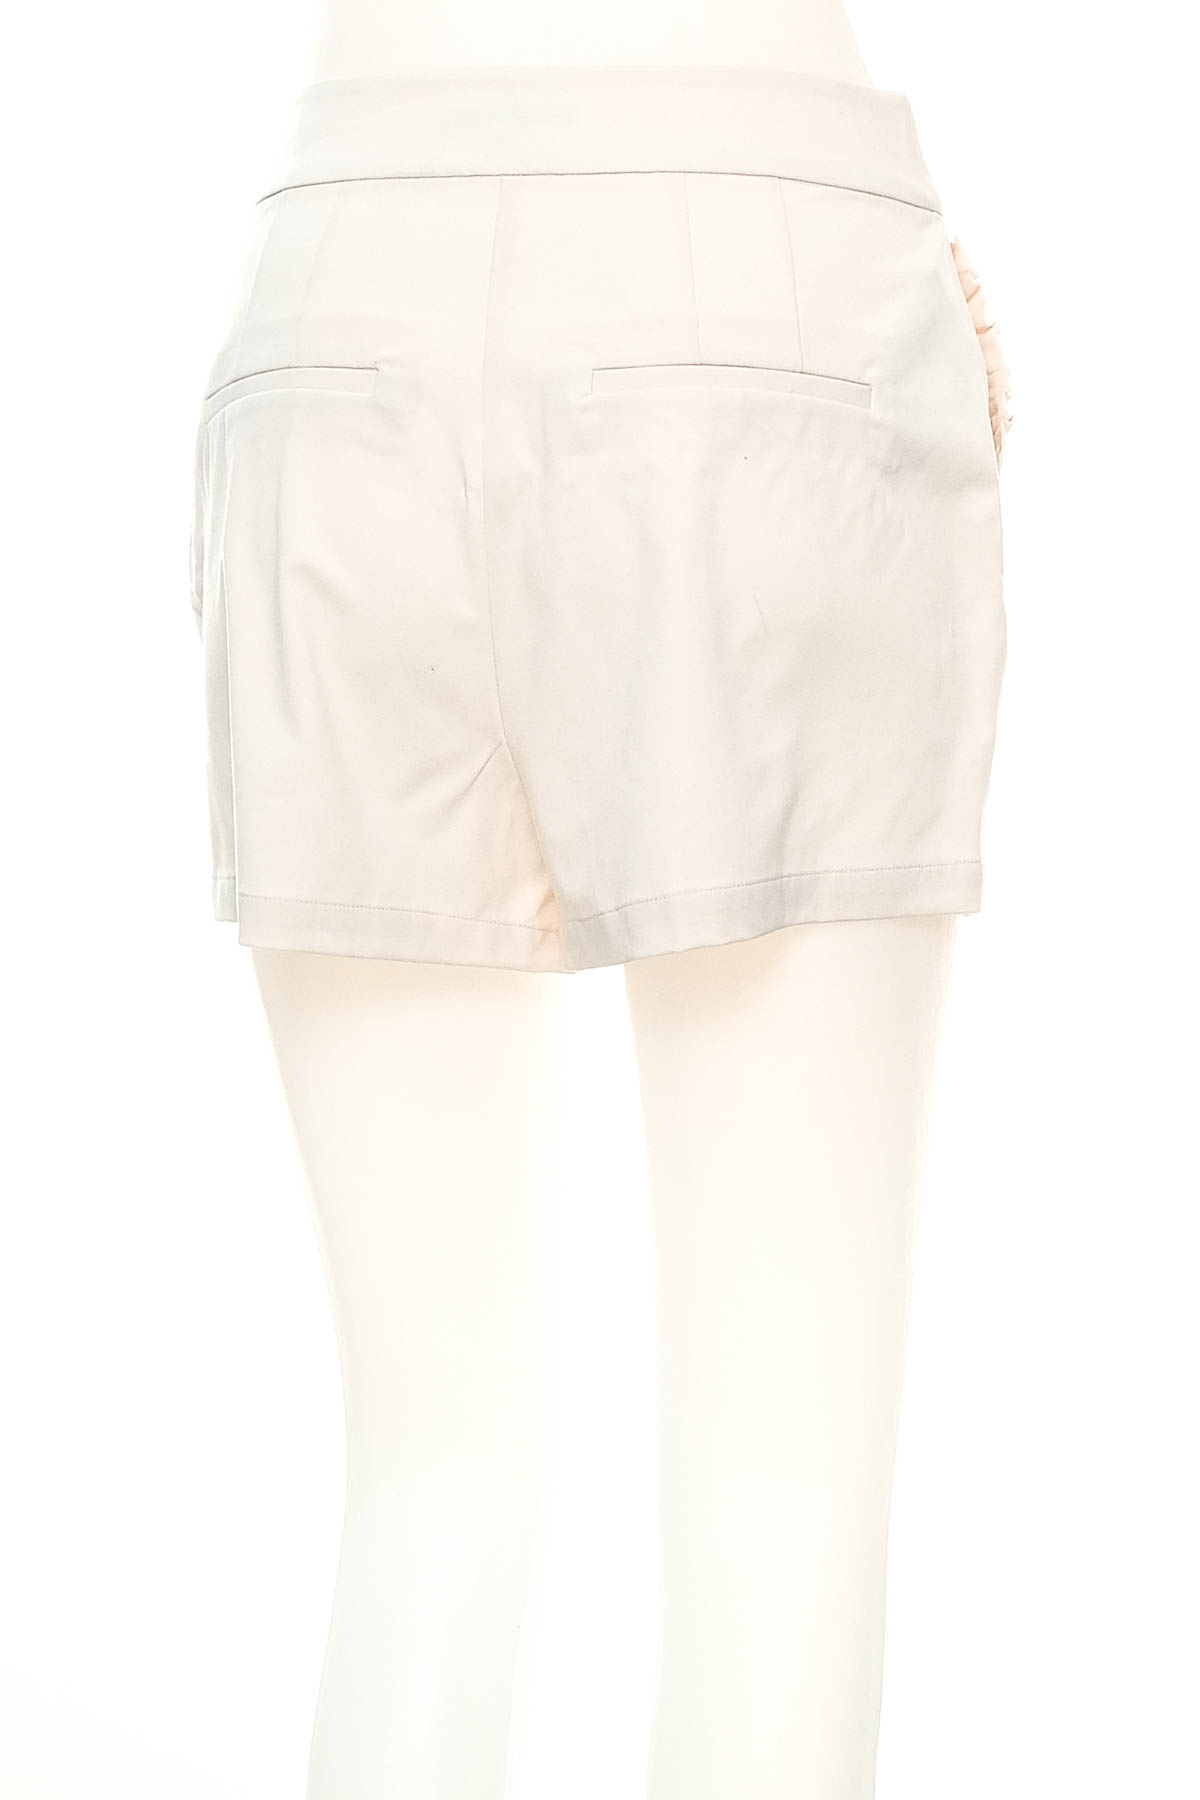 Female shorts - Mint & Berry - 1